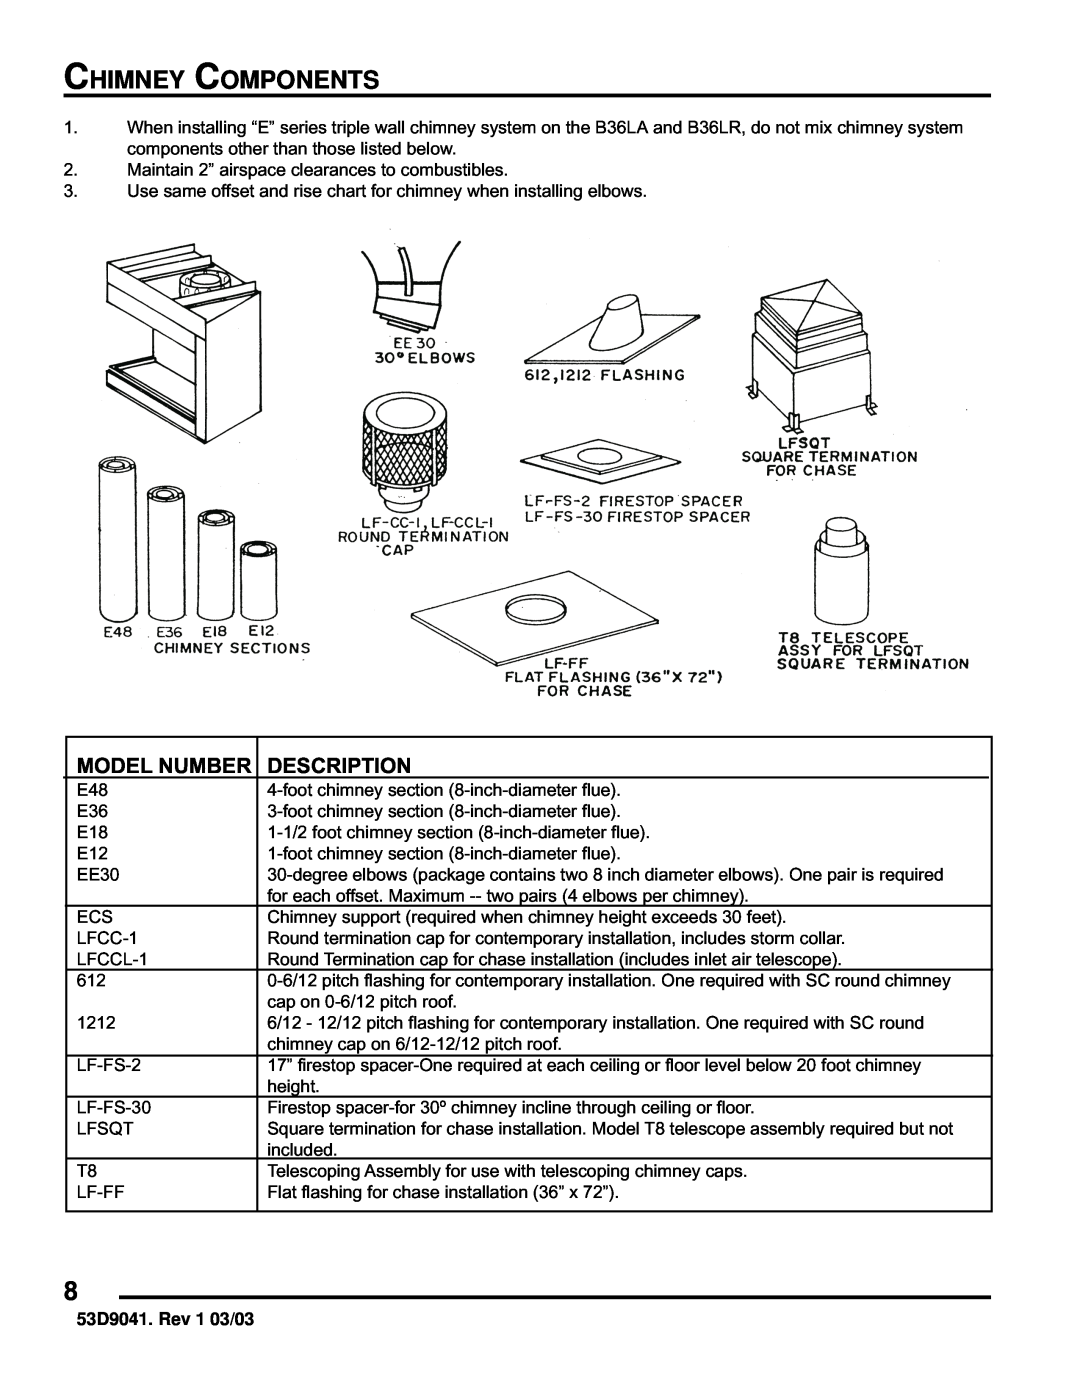 Martin Fireplaces B36RA, B36LA manual Chimney Components, Model Number, Description, 53D9041. Rev 1 03/03 